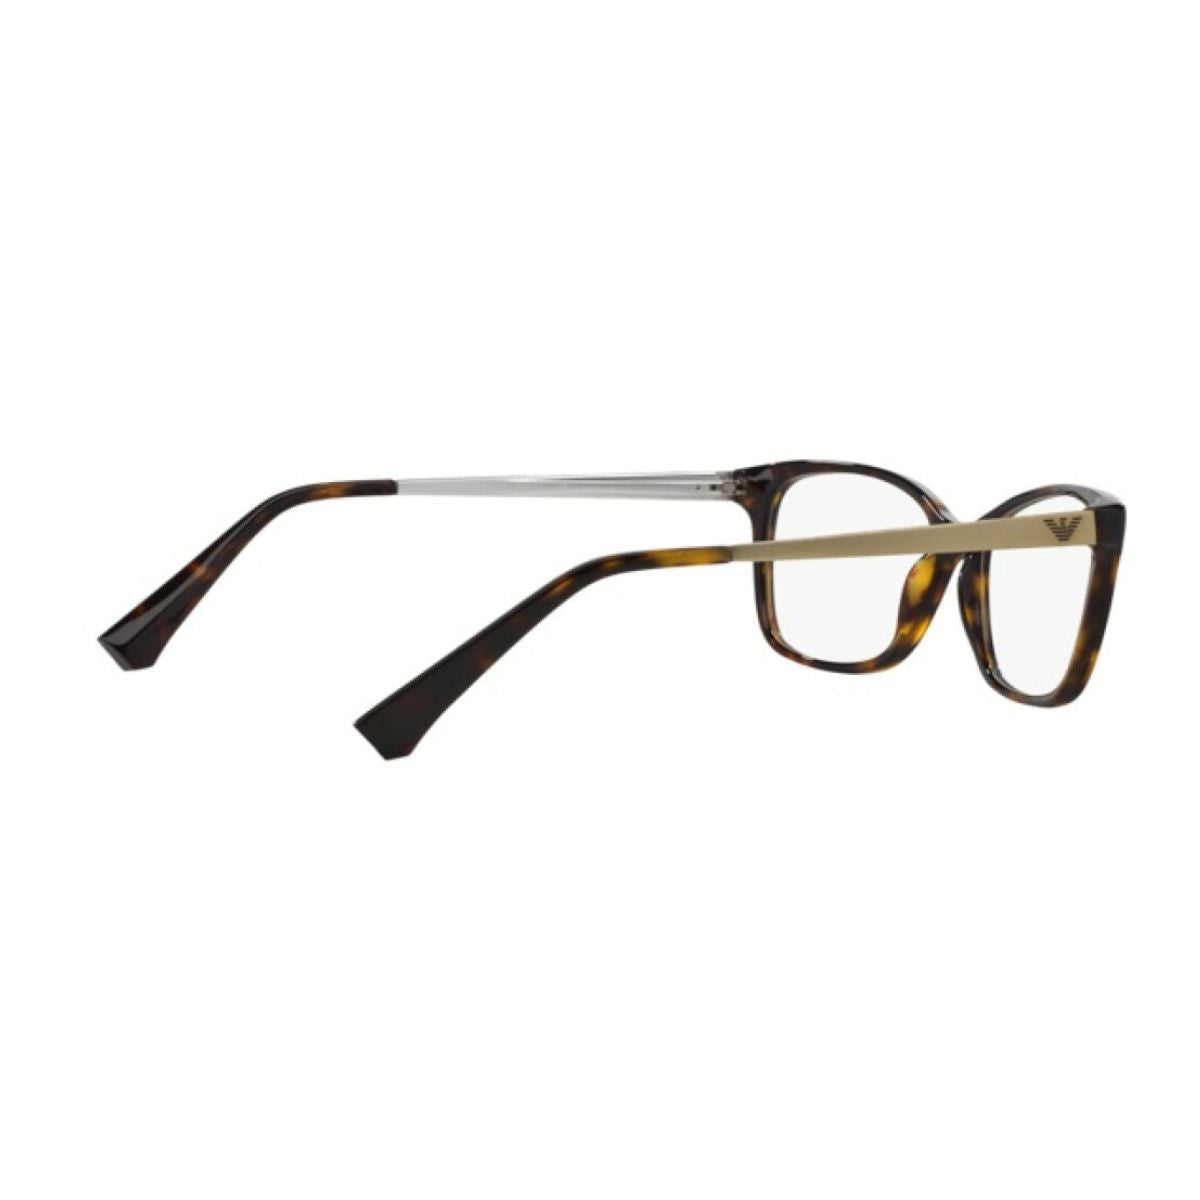 "Emporio Armani 3026 5026 prescription eyewear frame for women's at optorium"